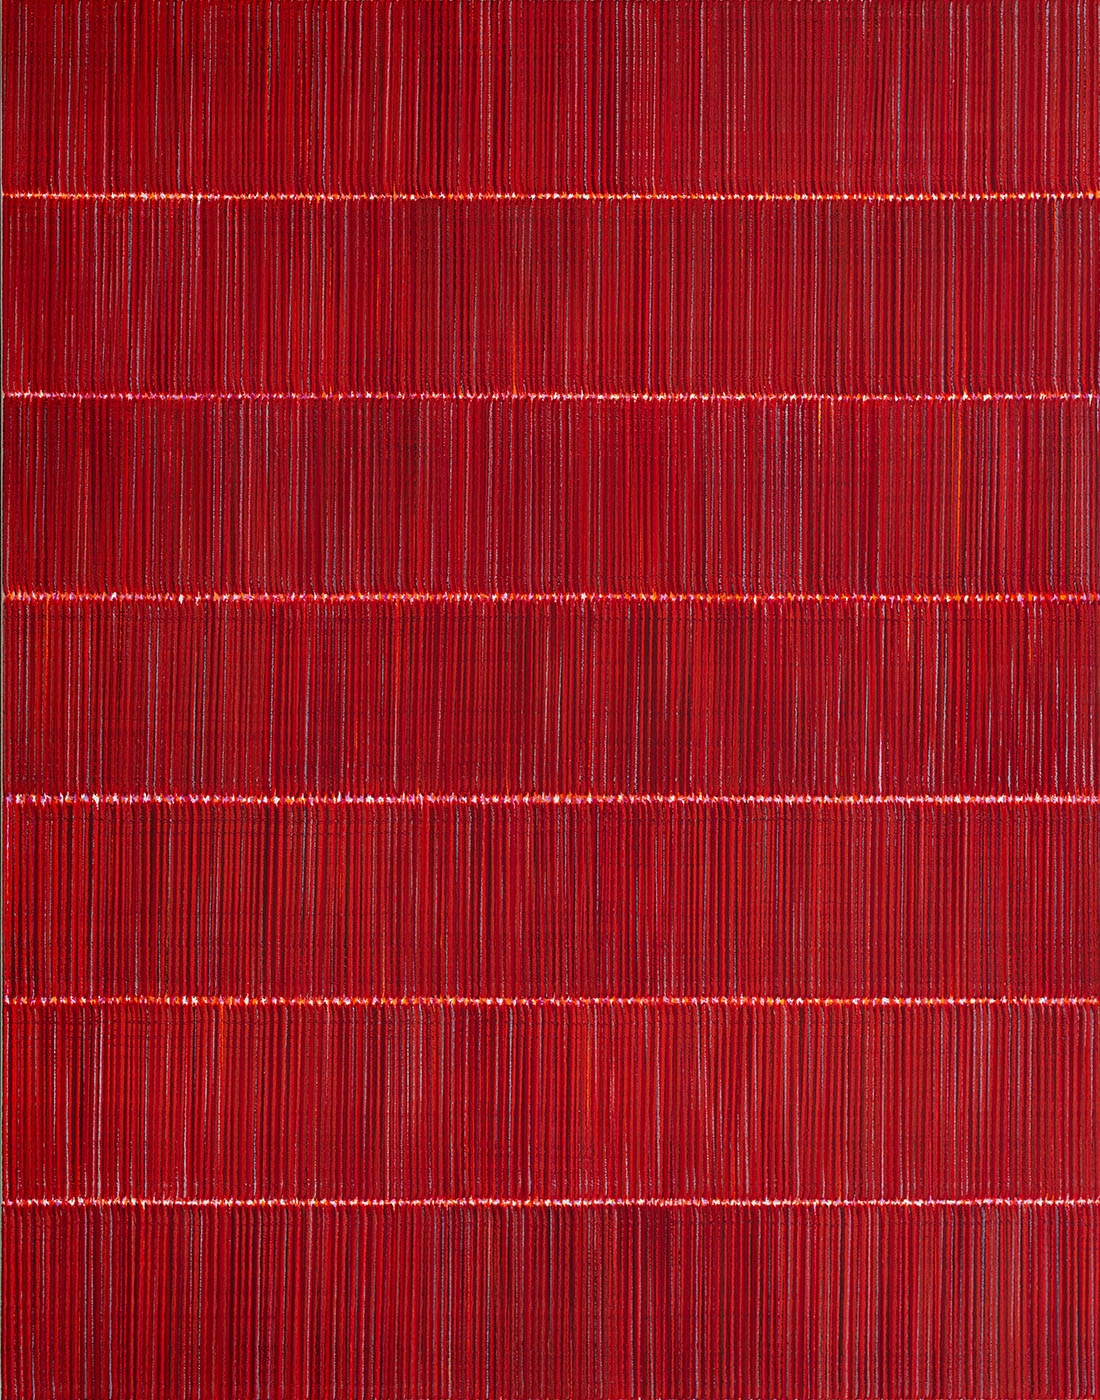 Nikola Dimitrov, FarbKlang VI, 2019, Pigmente, Bindemittel auf Leinwand, 140 × 110 cm